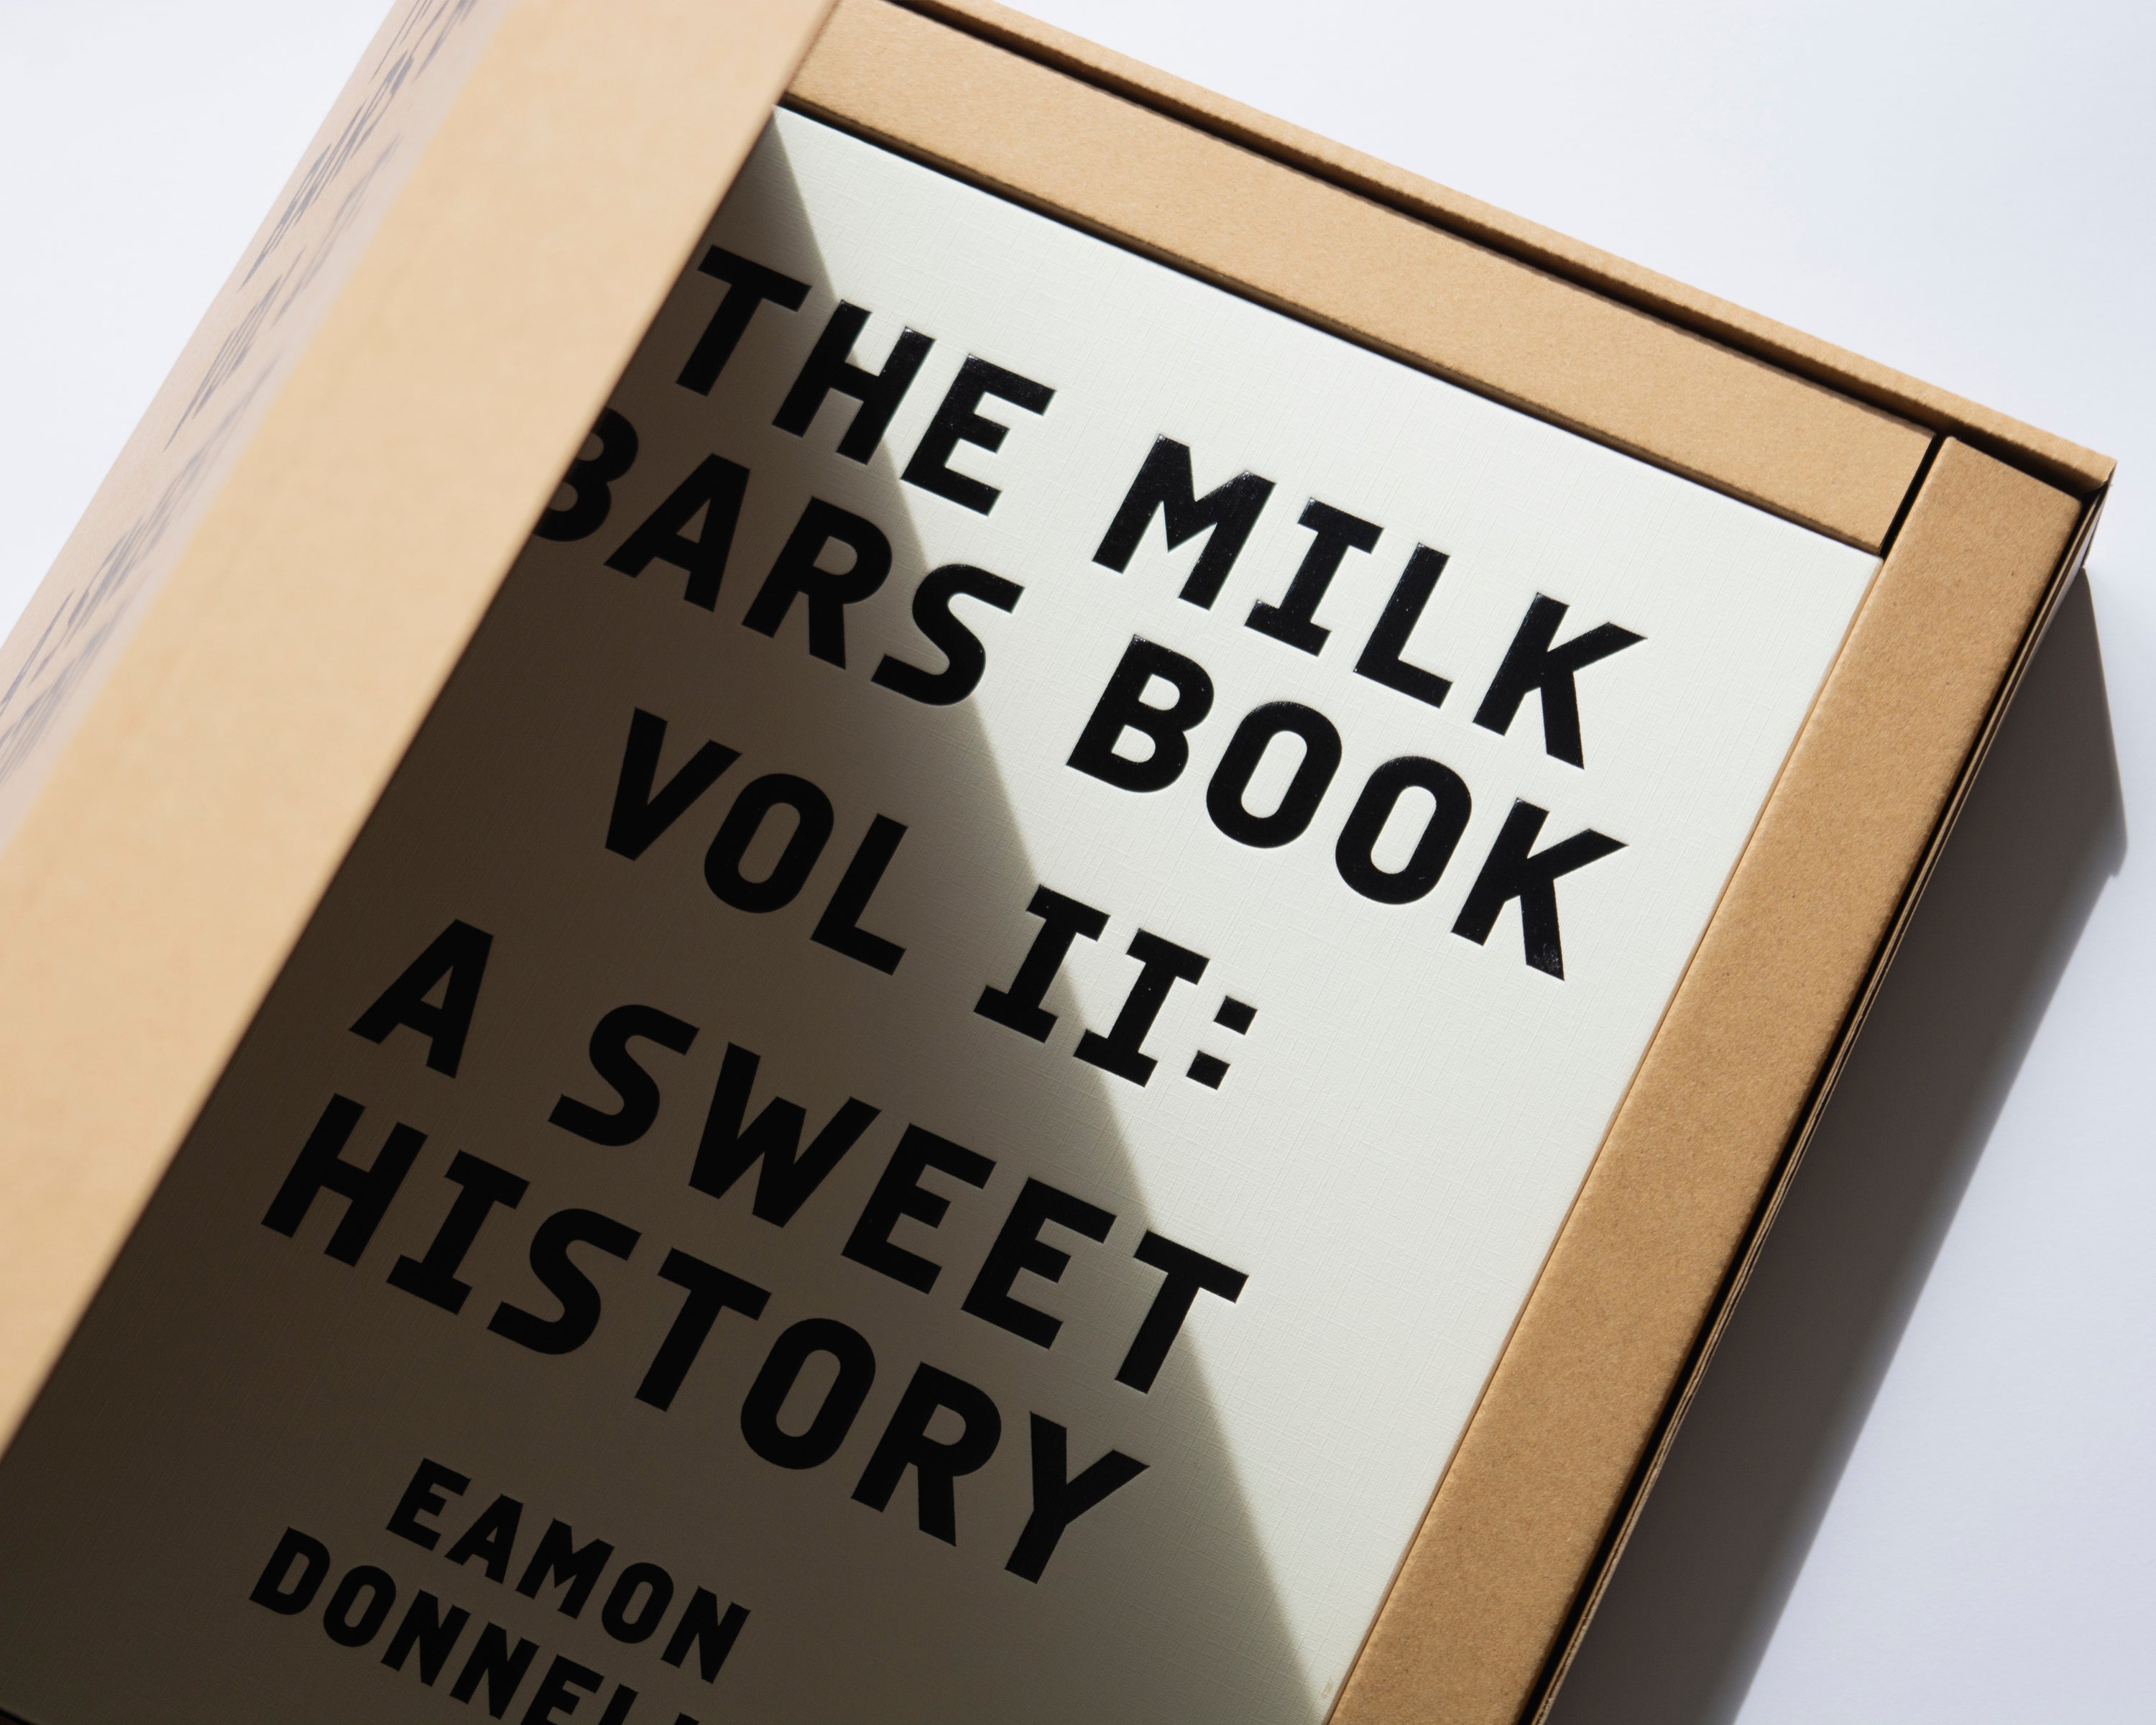 The Milk Bars Book. Volume II: A Sweet History [Milk Cover Colour]